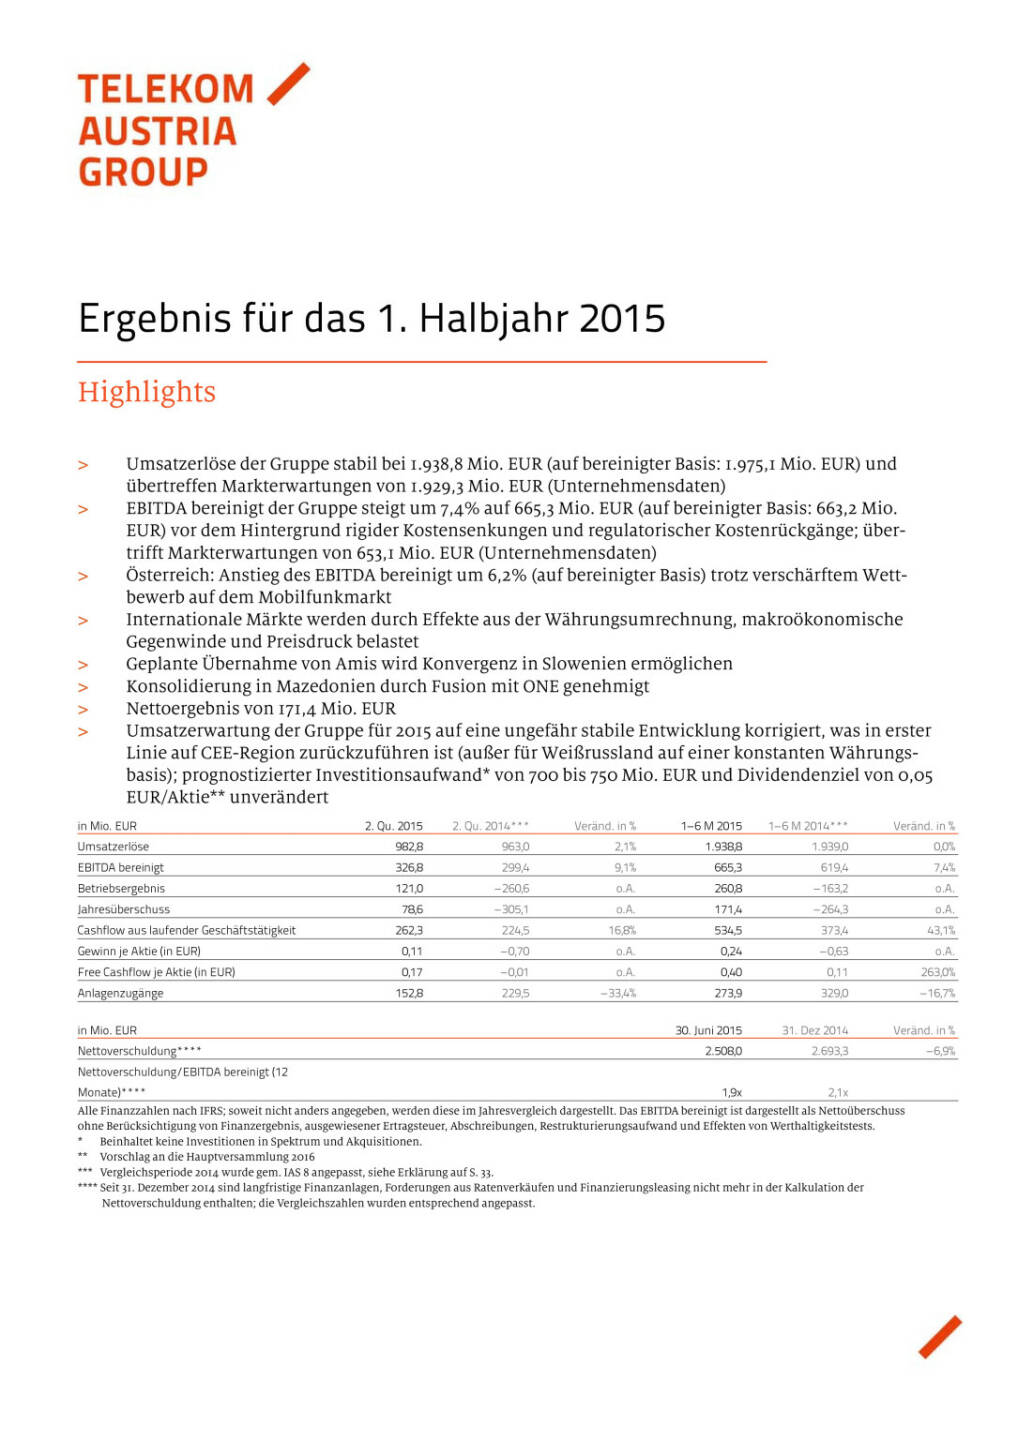 Telekom Austria - Ergebnis 1. HJ und Q2 2015, Seite 1/39, komplettes Dokument unter http://boerse-social.com/static/uploads/file_234_telekom_austria_-_ergebnis_1_hj_und_q2_2015.pdf